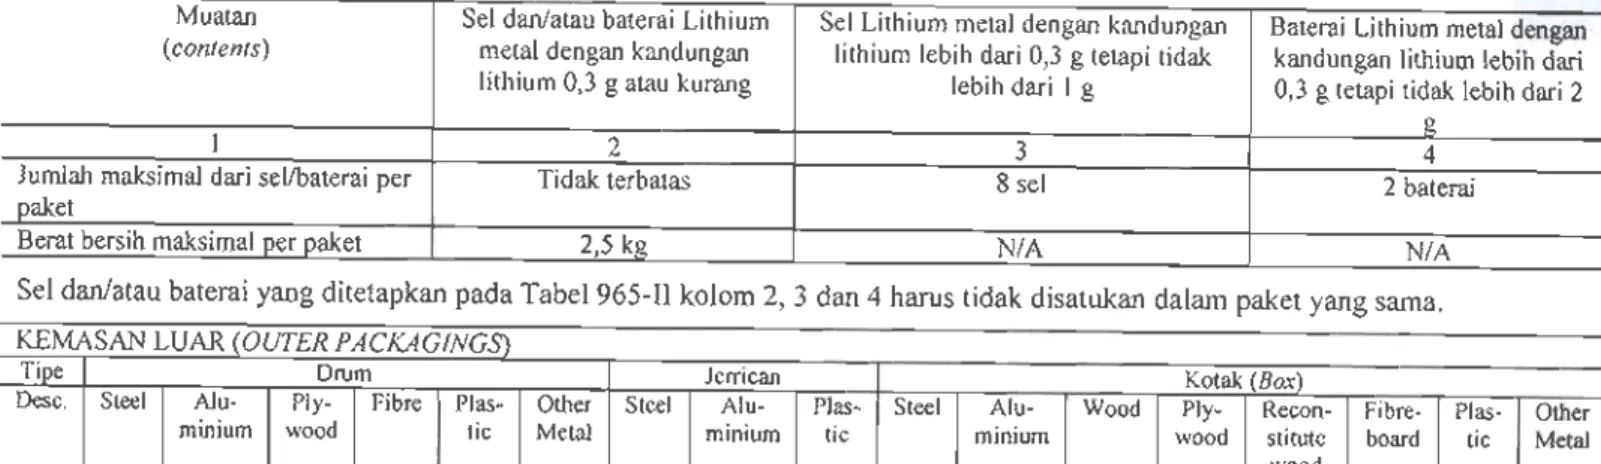 Tabel 968-II